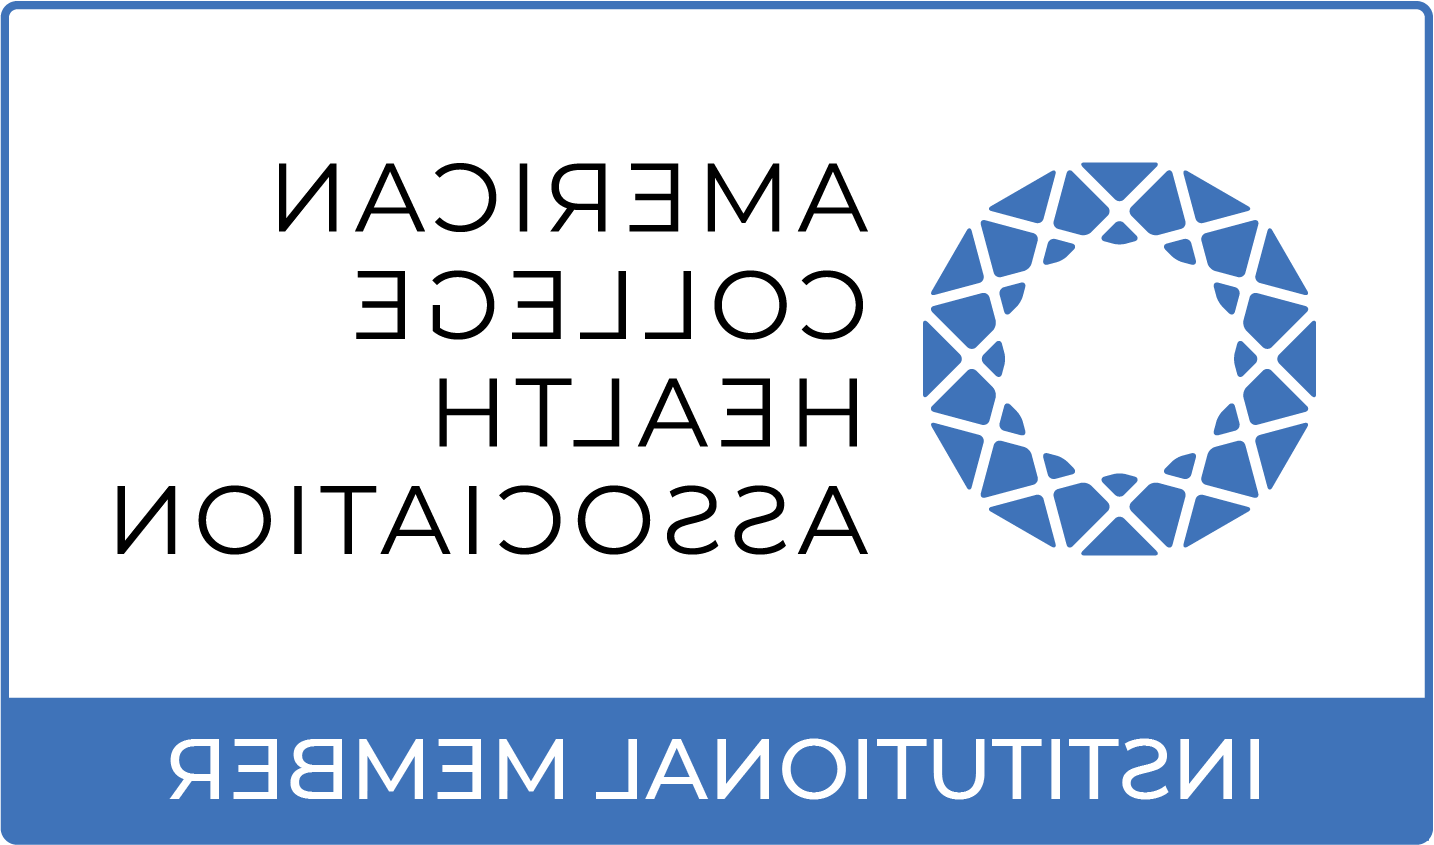 ACHA Logo